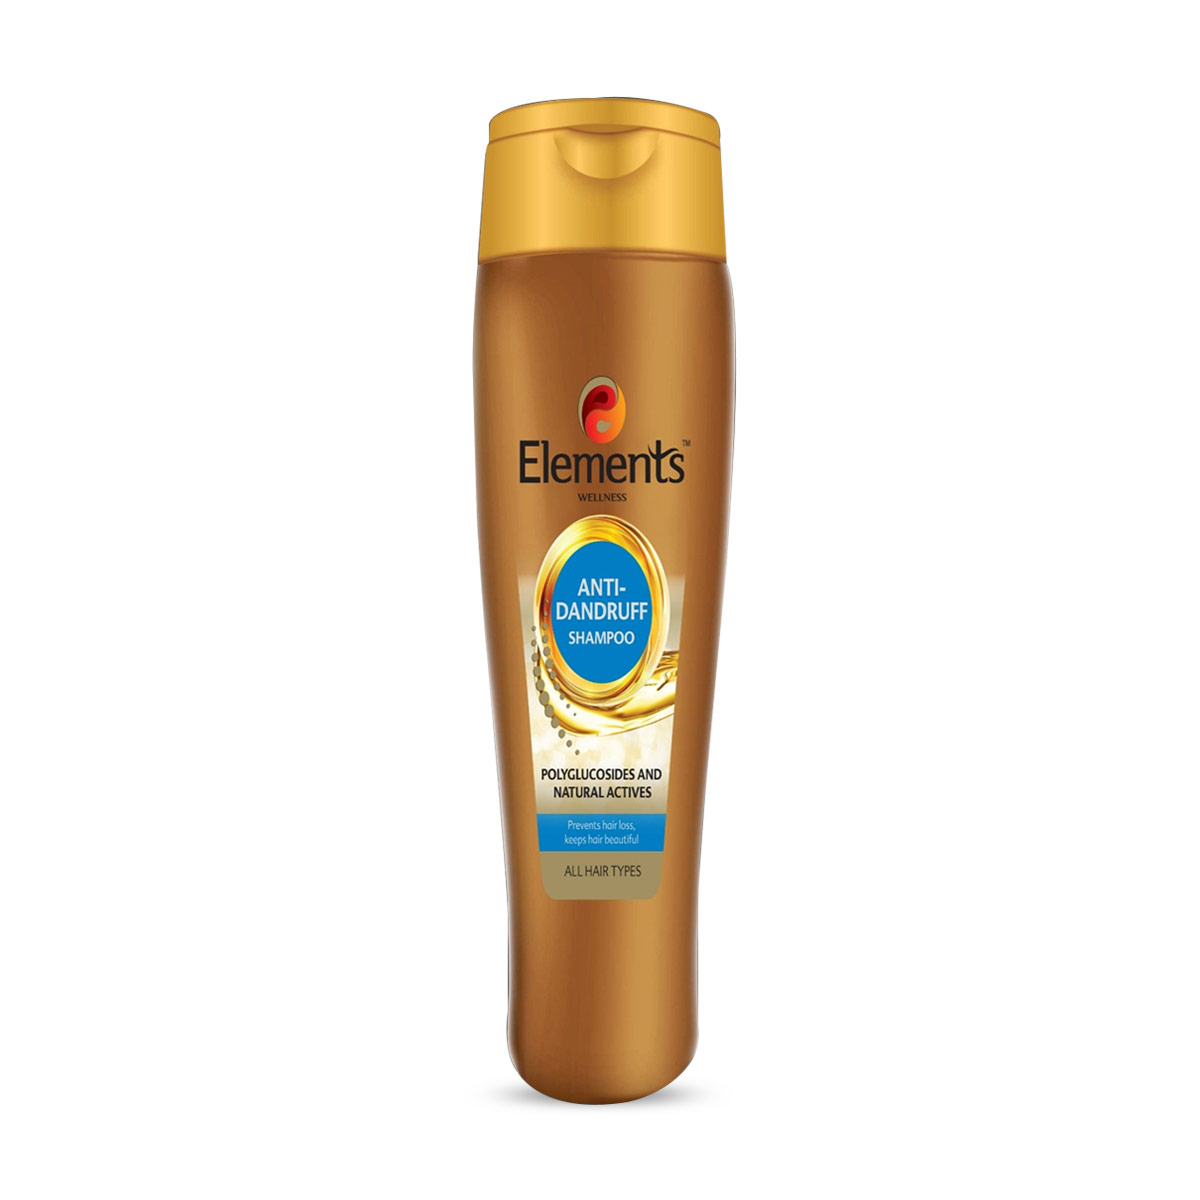 Buy Elements Anti Dandruff Shampoo at Best Price Online